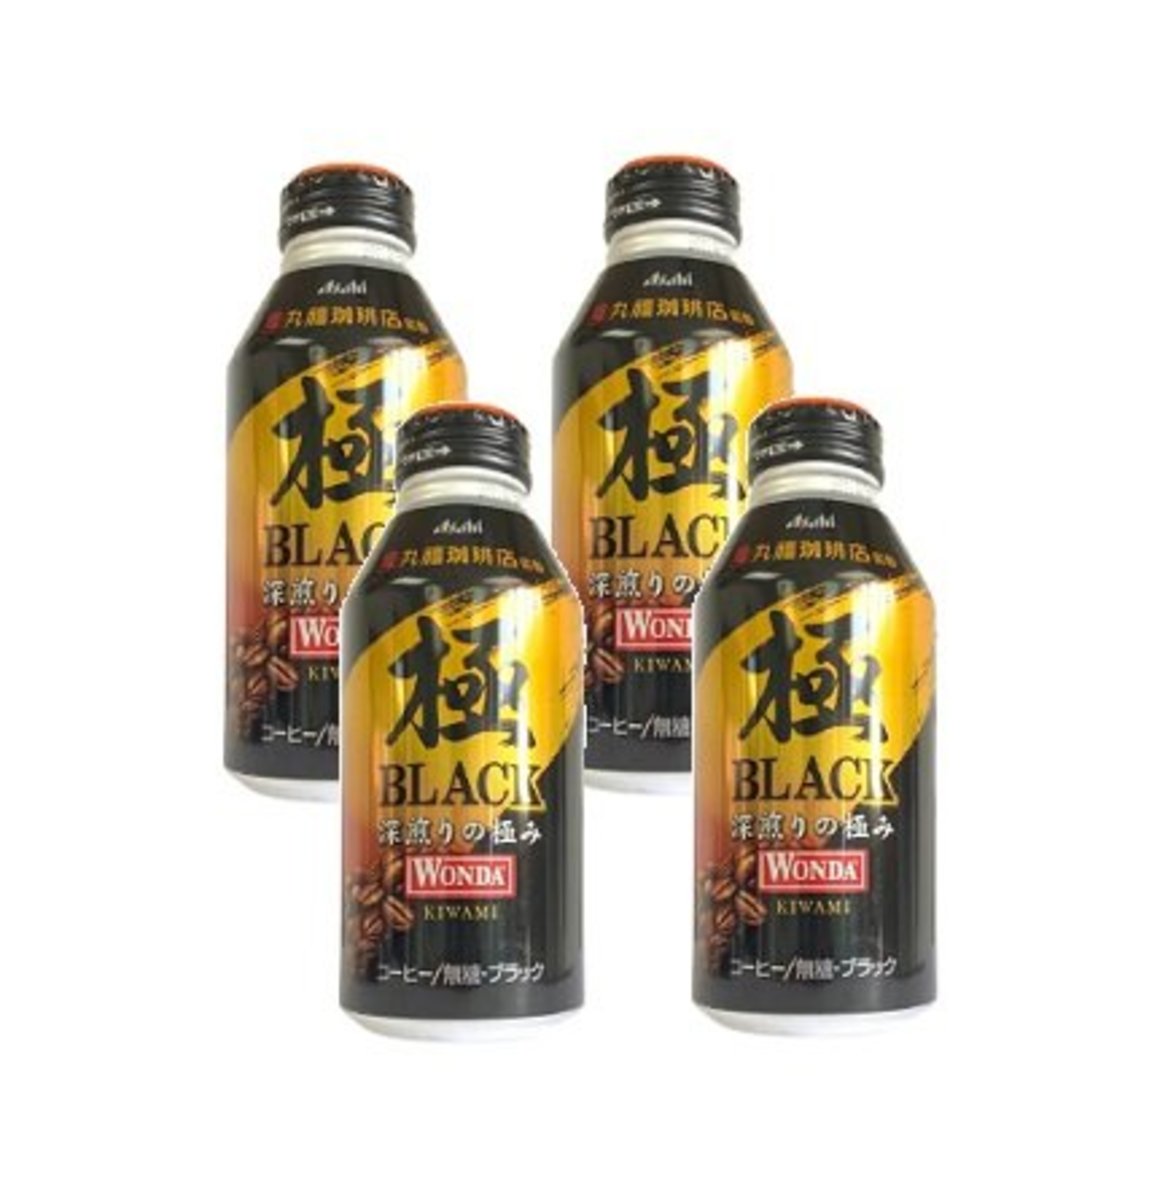 Asahi | Wonda Black Coffee 400g x 4 cans (New Packing) | HKTVmall The